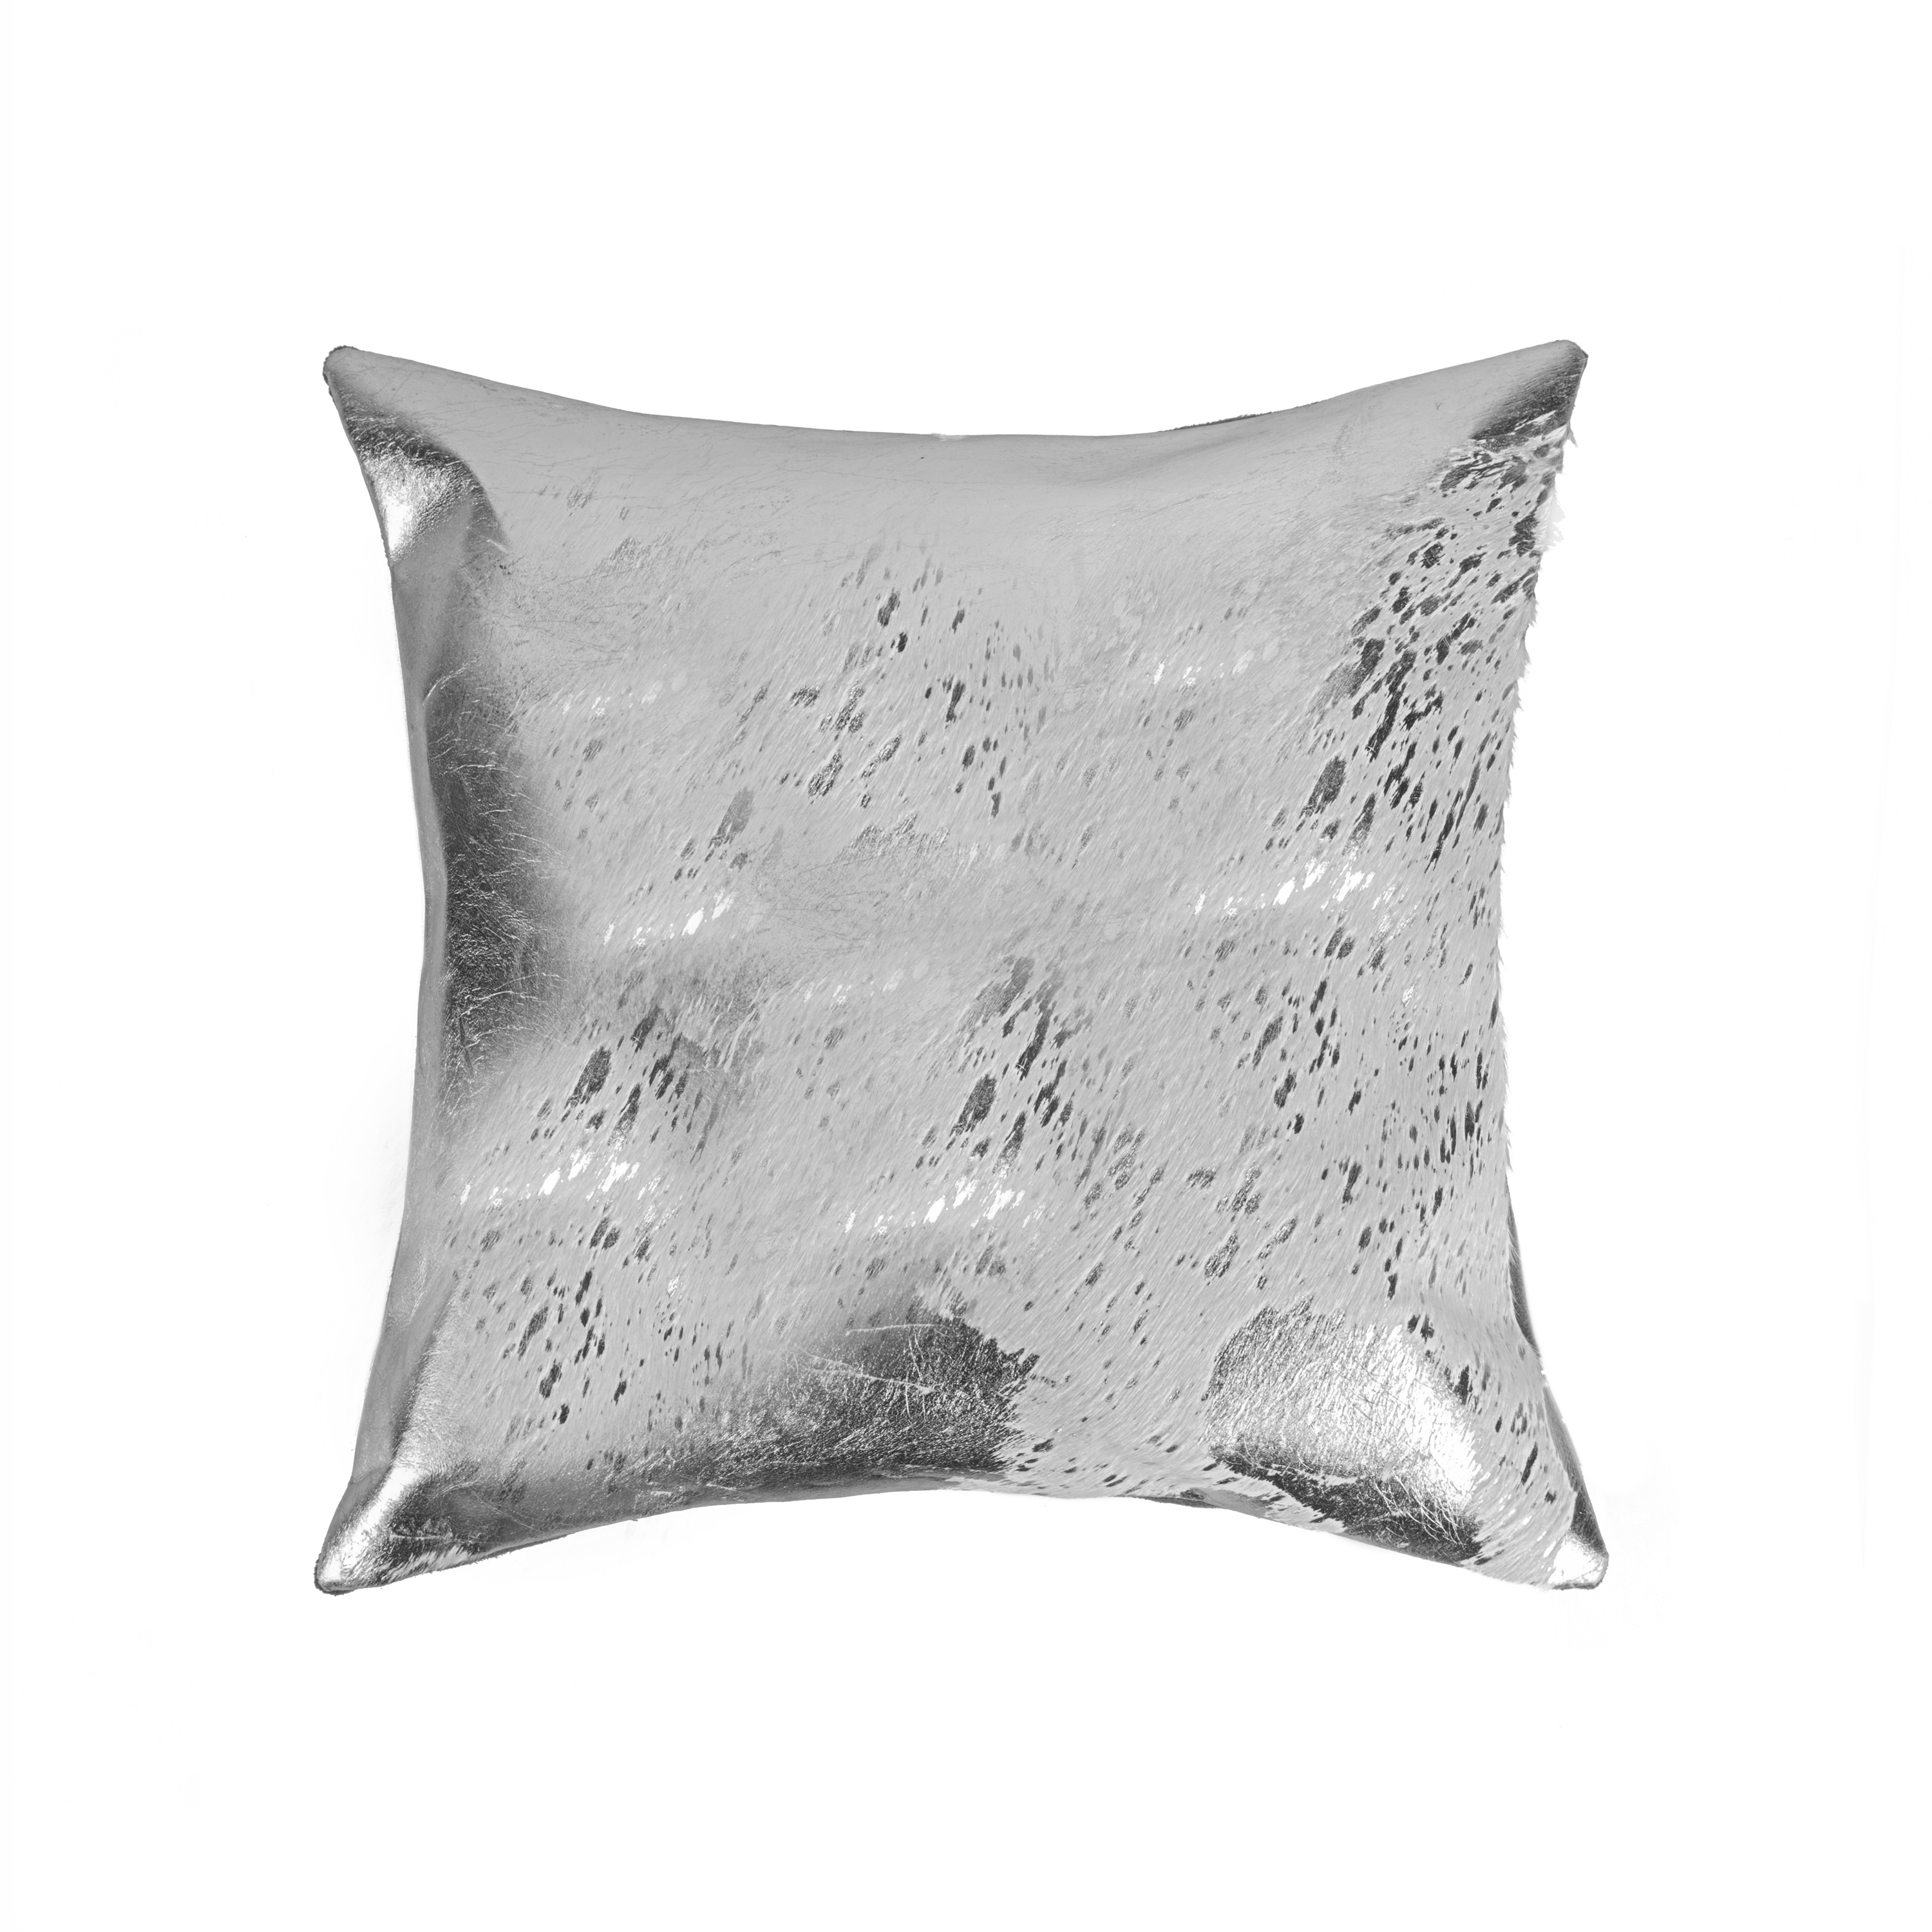 Torino Scotland Cowhide Pillow 18"x18" Grey & Silver